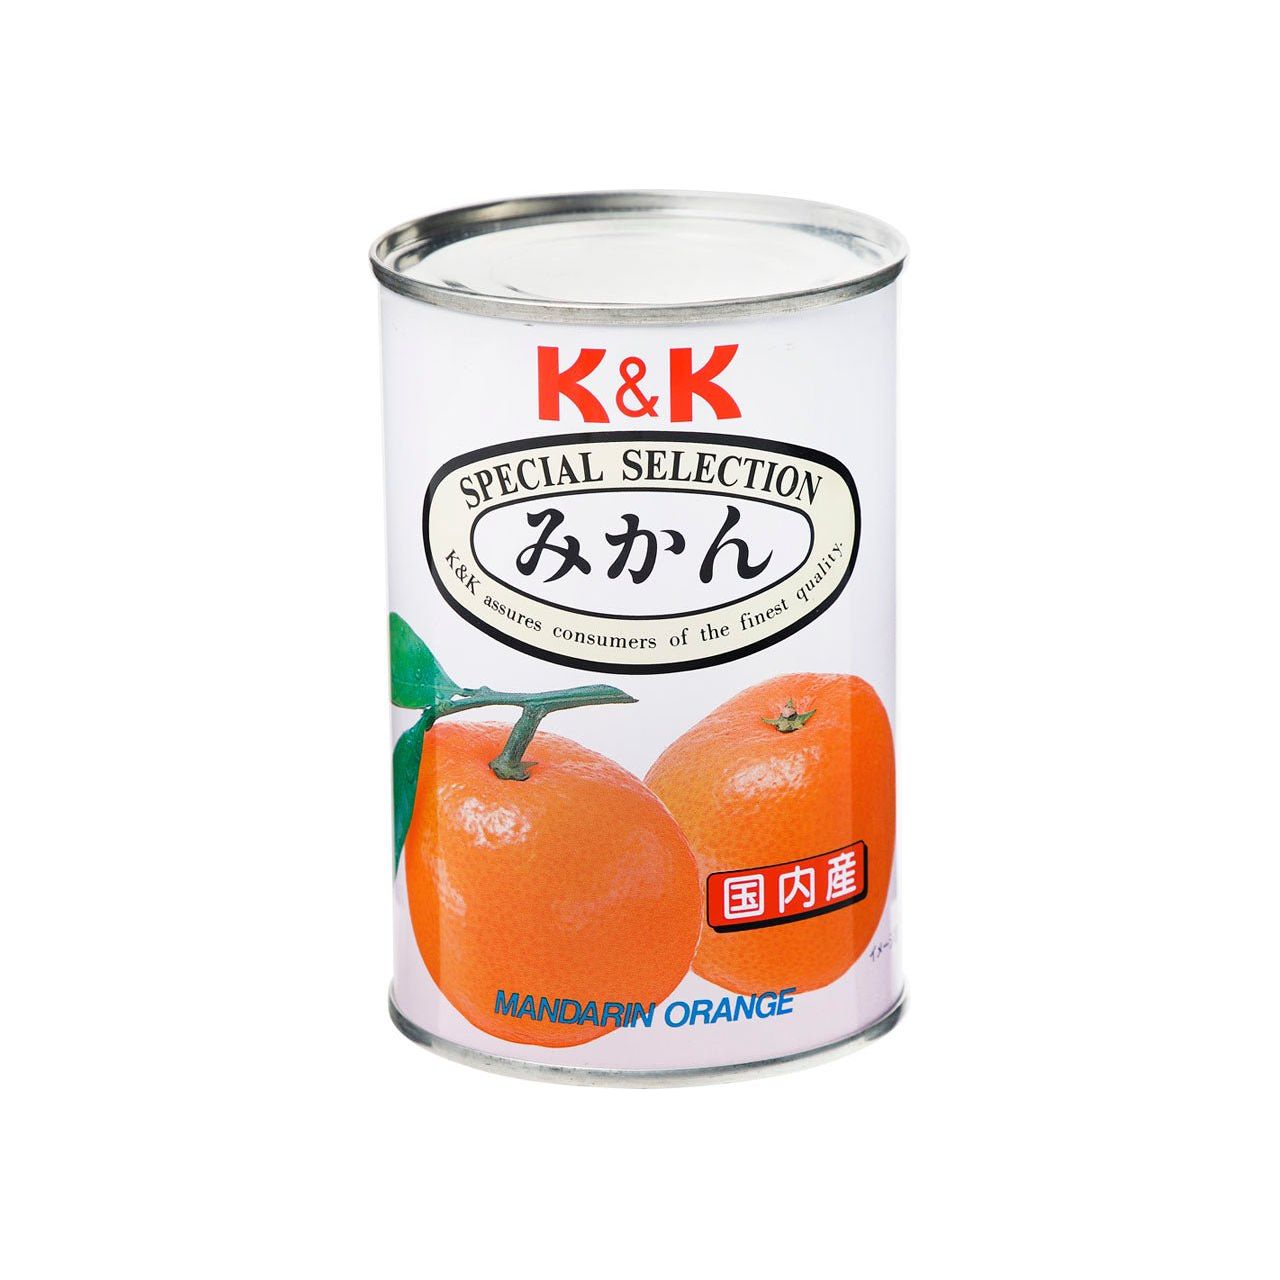 K&K Mandarin